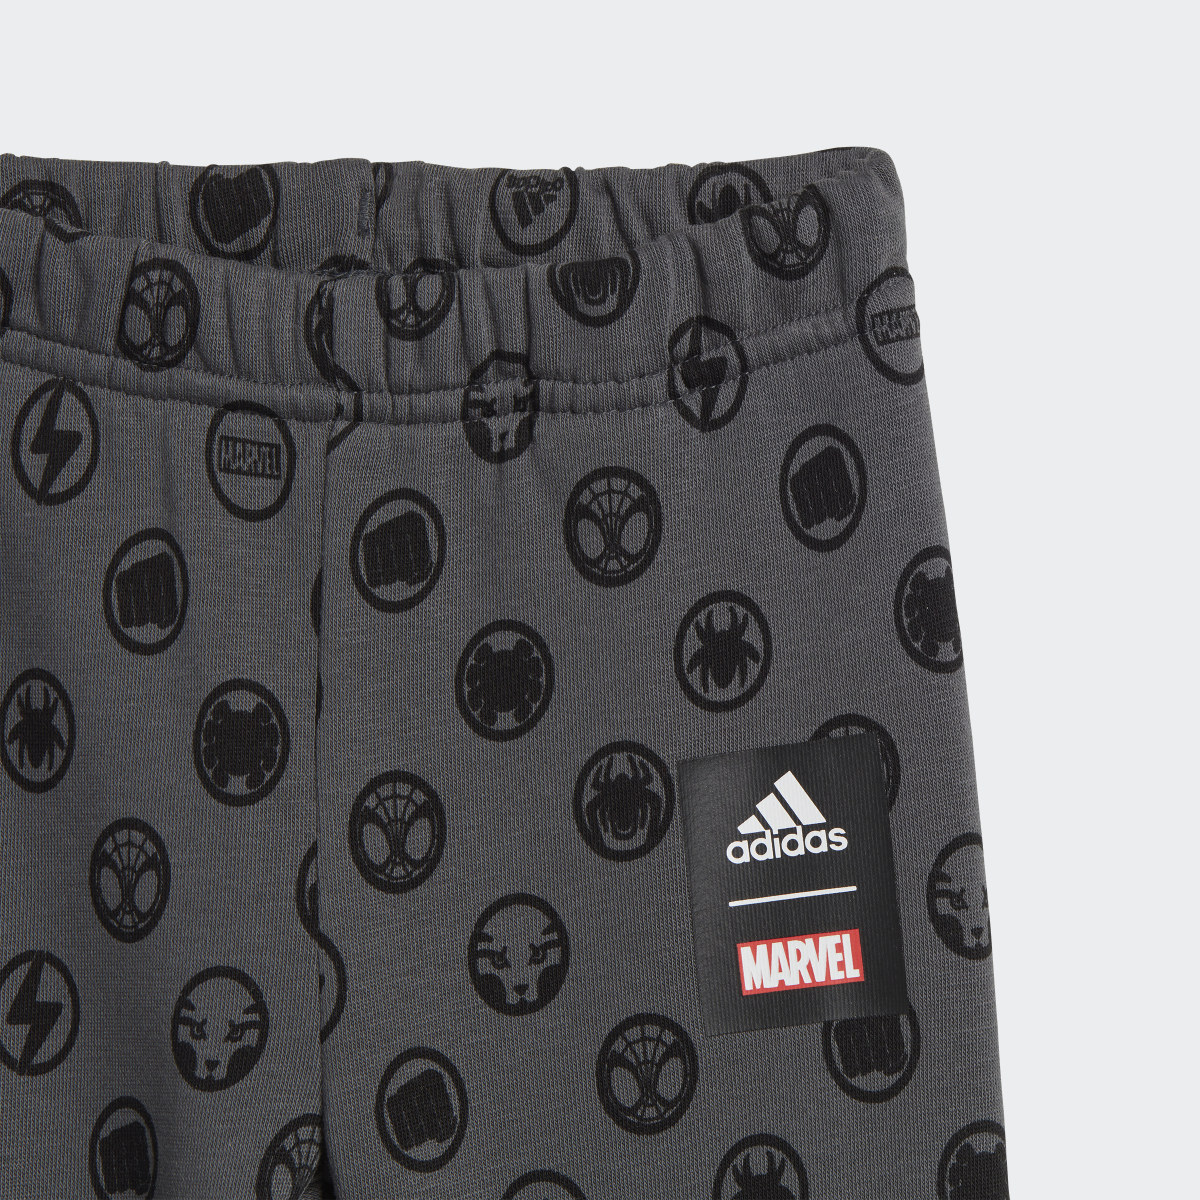 Adidas x Marvel Spider-Man Joggers. 9